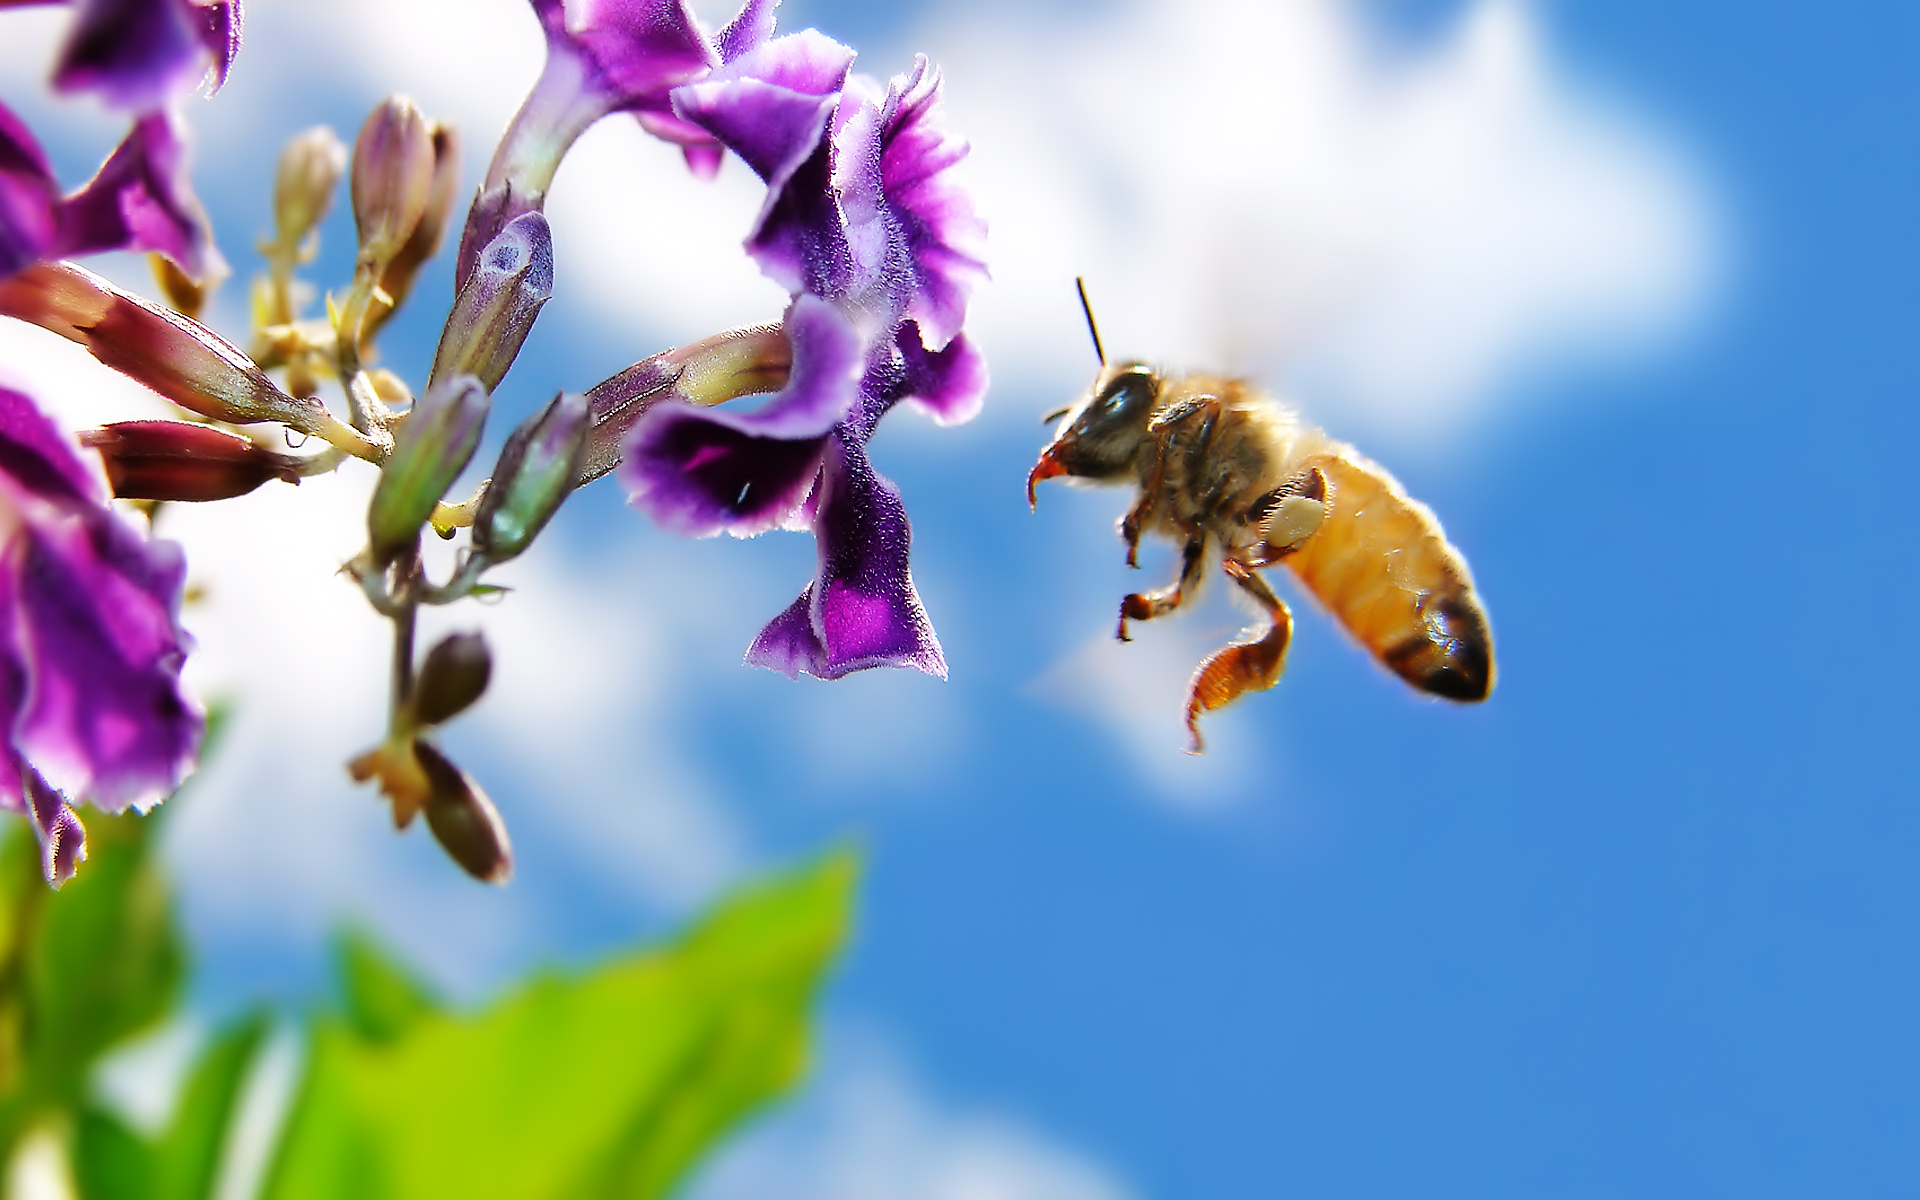 Bee on Flower Widescreen968944252 - Bee on Flower Widescreen - Widescreen, flower, Arctic